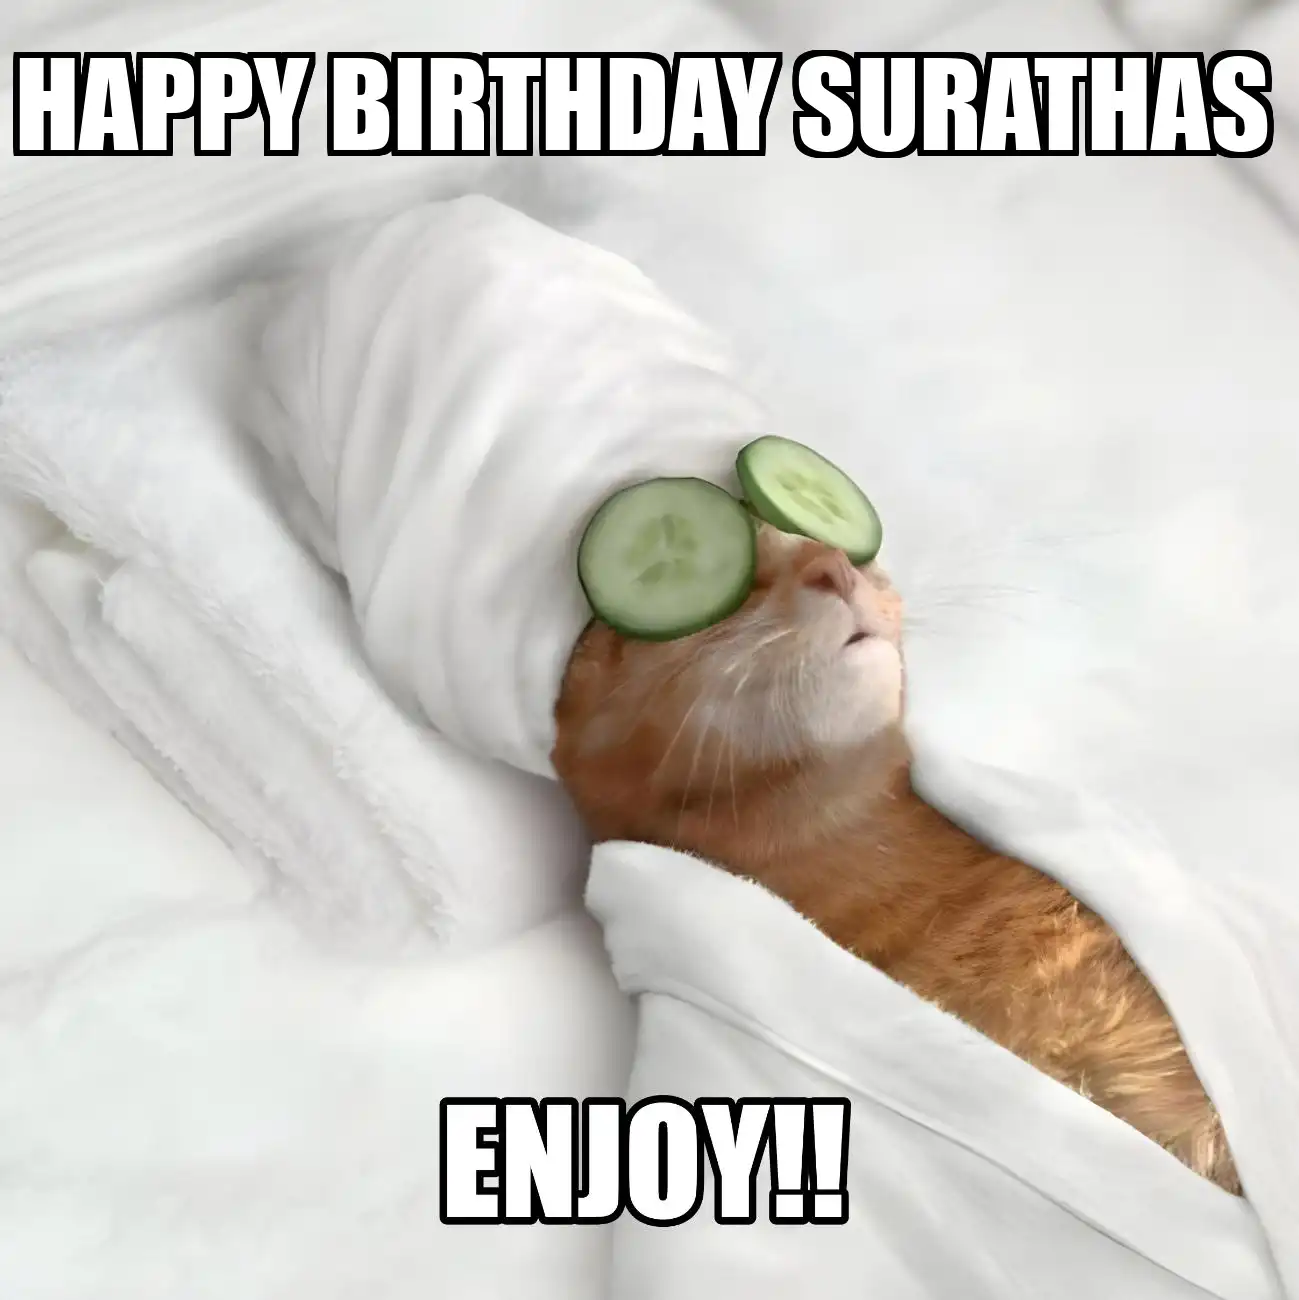 Happy Birthday Surathas Enjoy Cat Meme